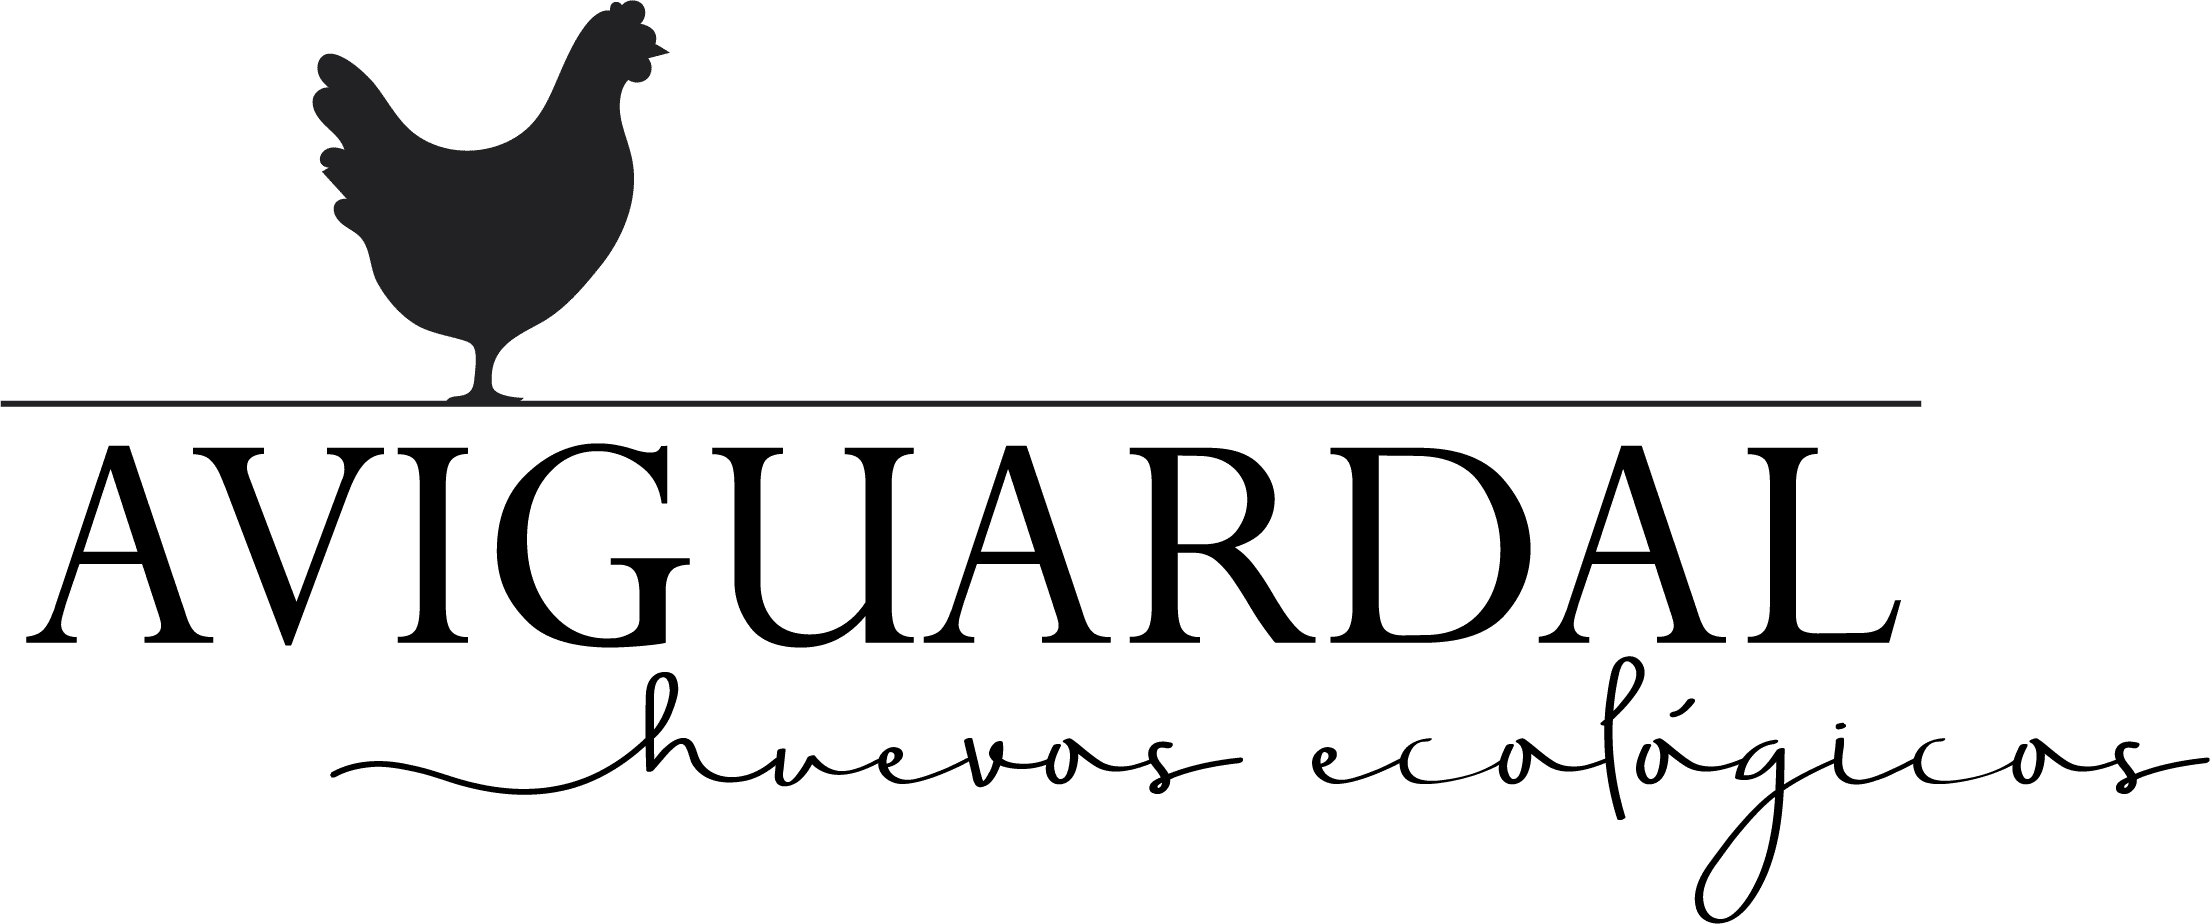 Logo Aviguardial huevos ecológicos - Sabor Granada